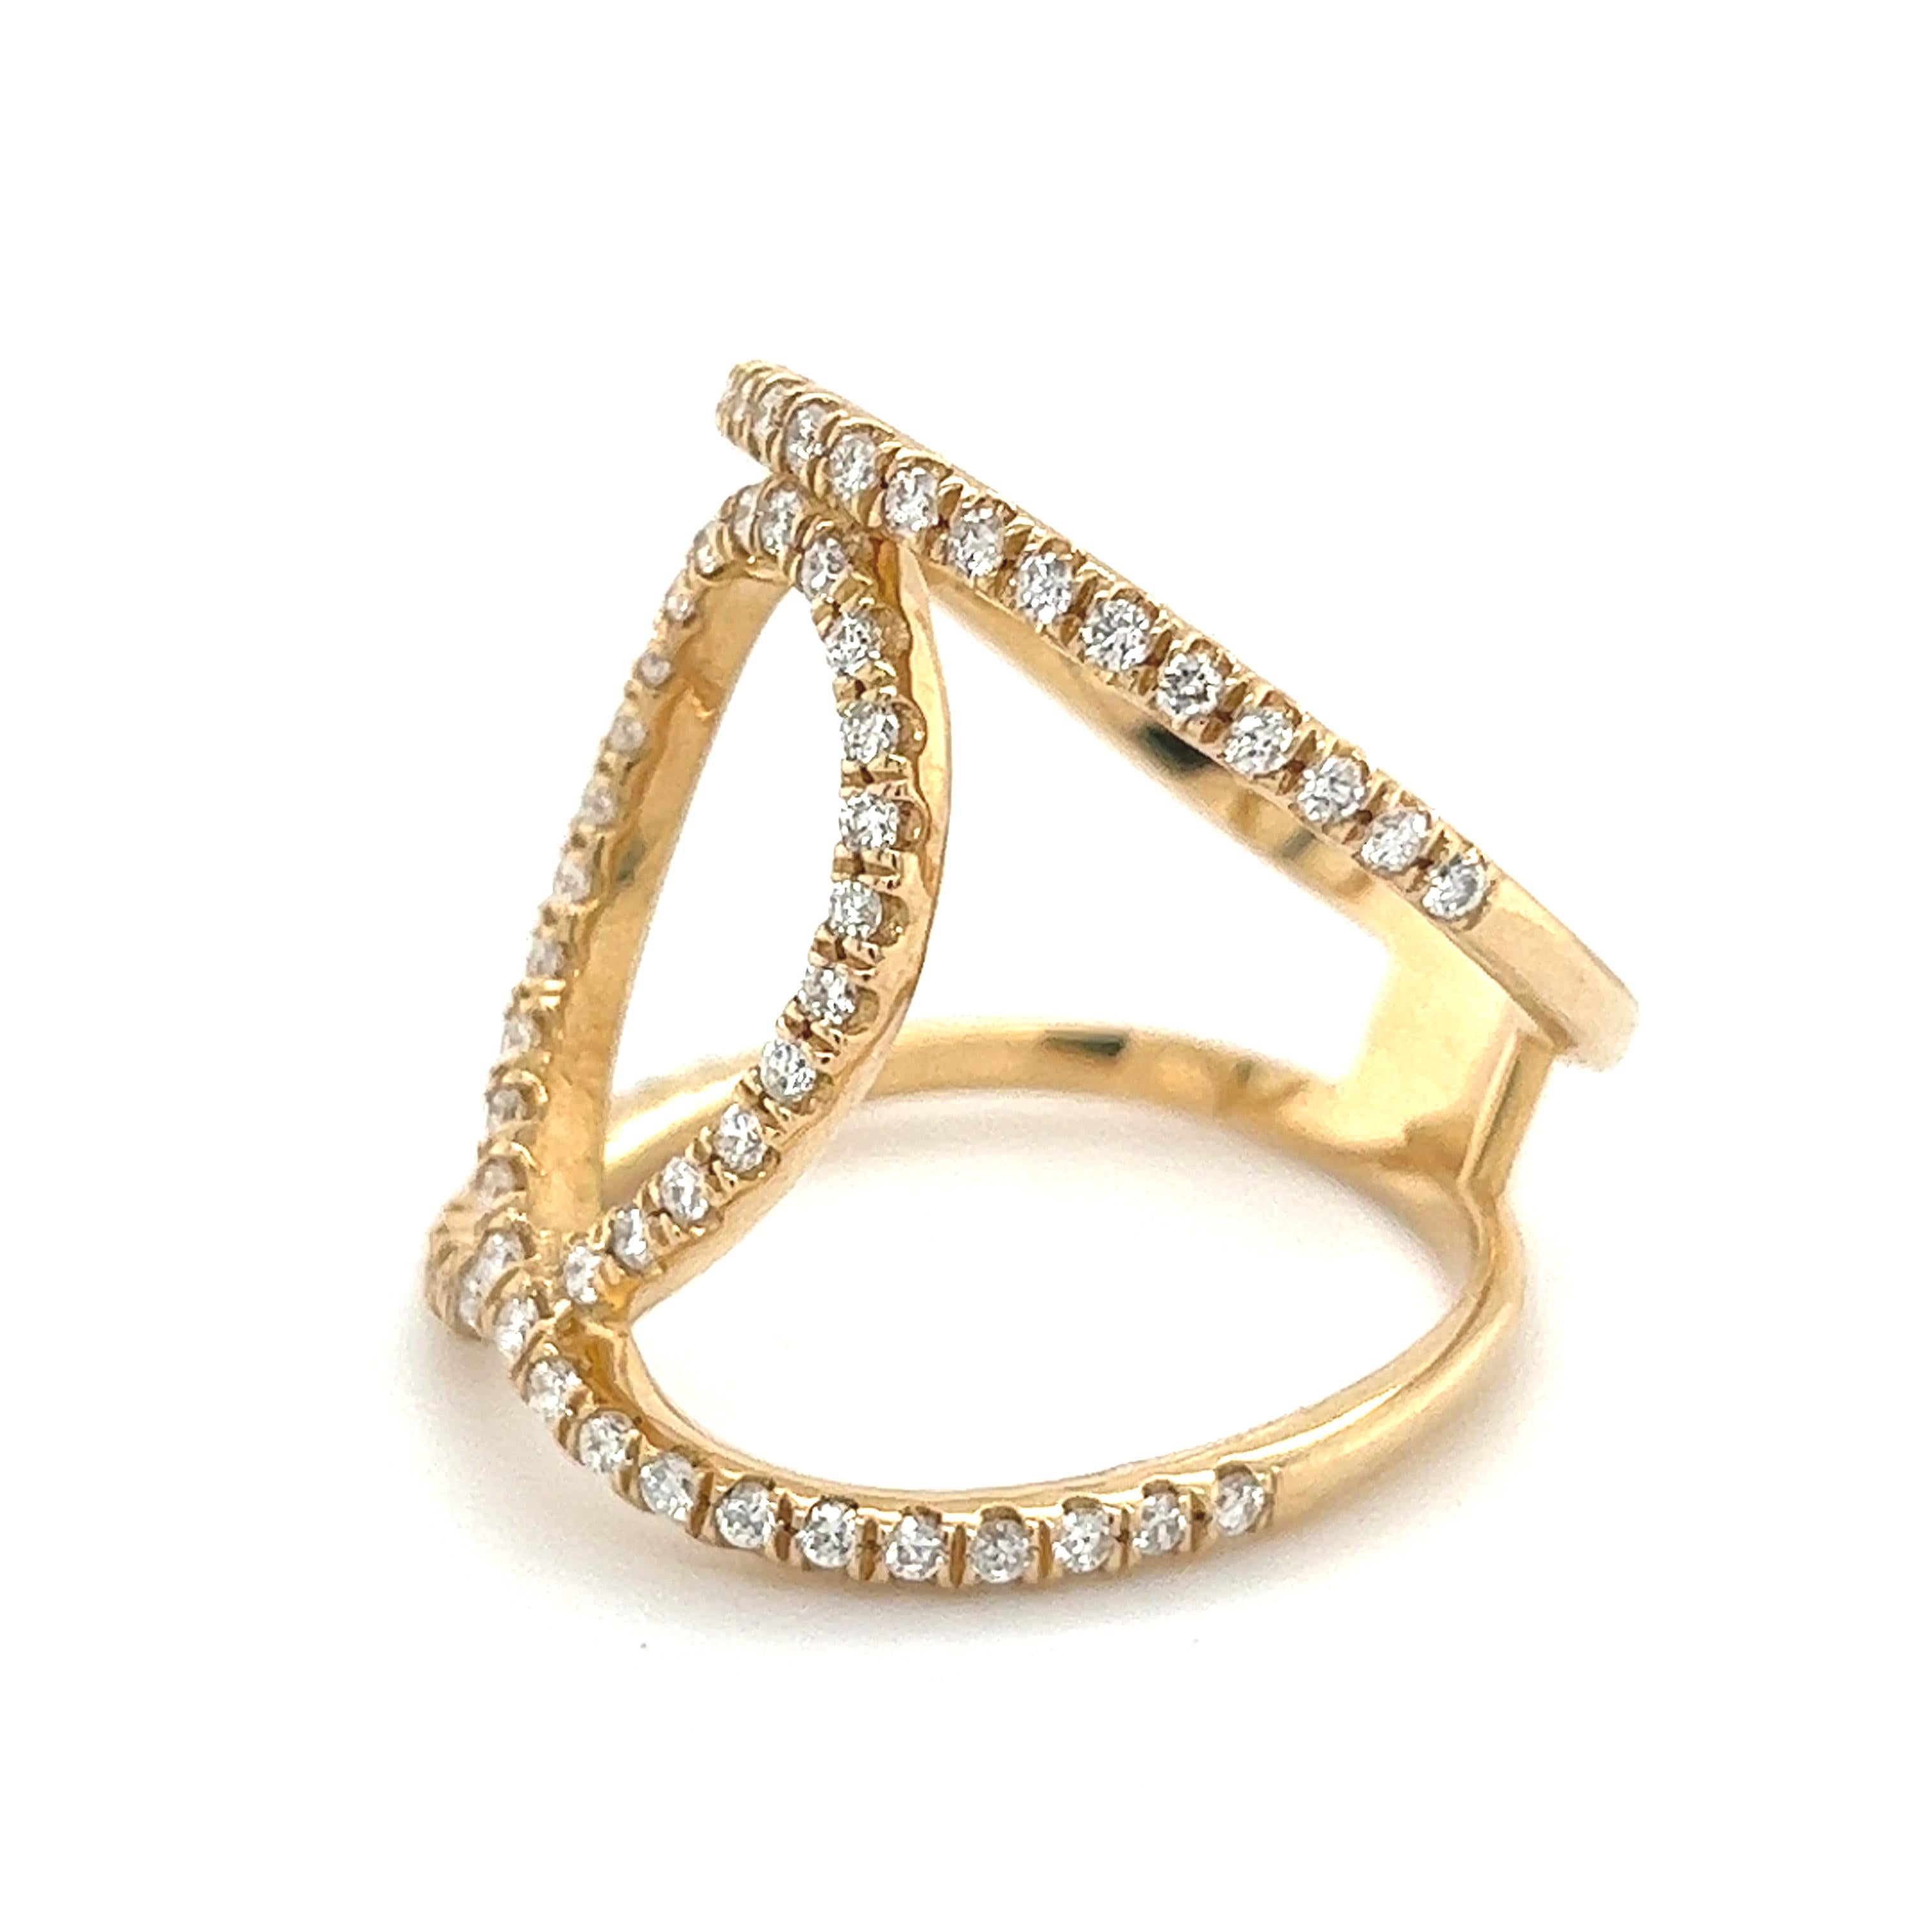 Women's Diamond Ring 14k Gold 0.85 TCW 7.02 Grams Certified For Sale